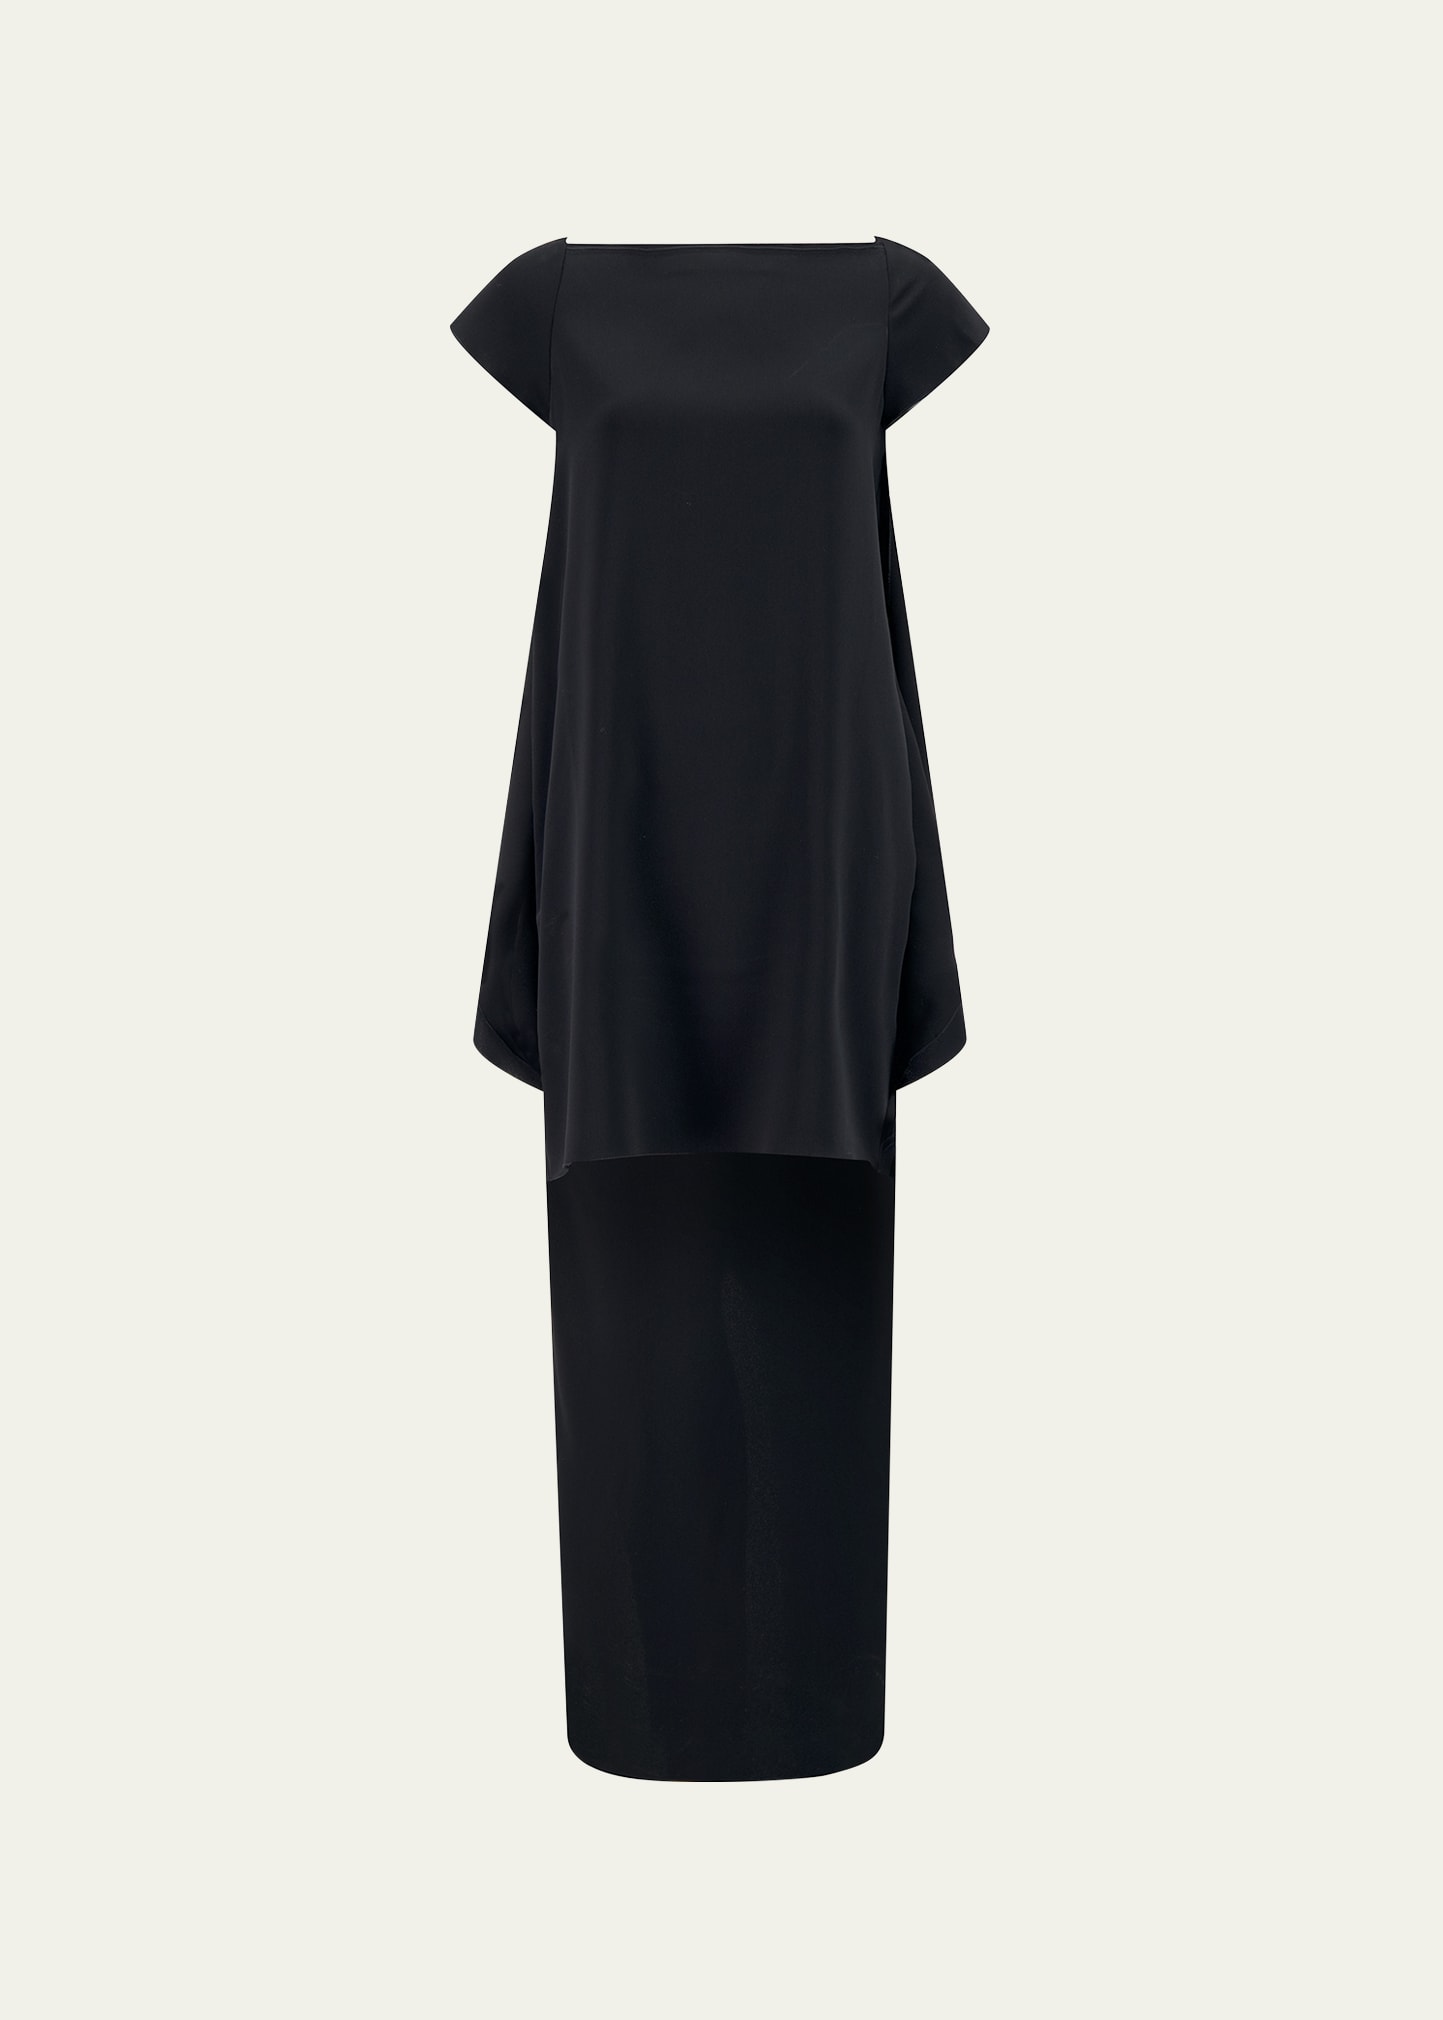 Shang Xia Foldover High-low Dress In Black Black